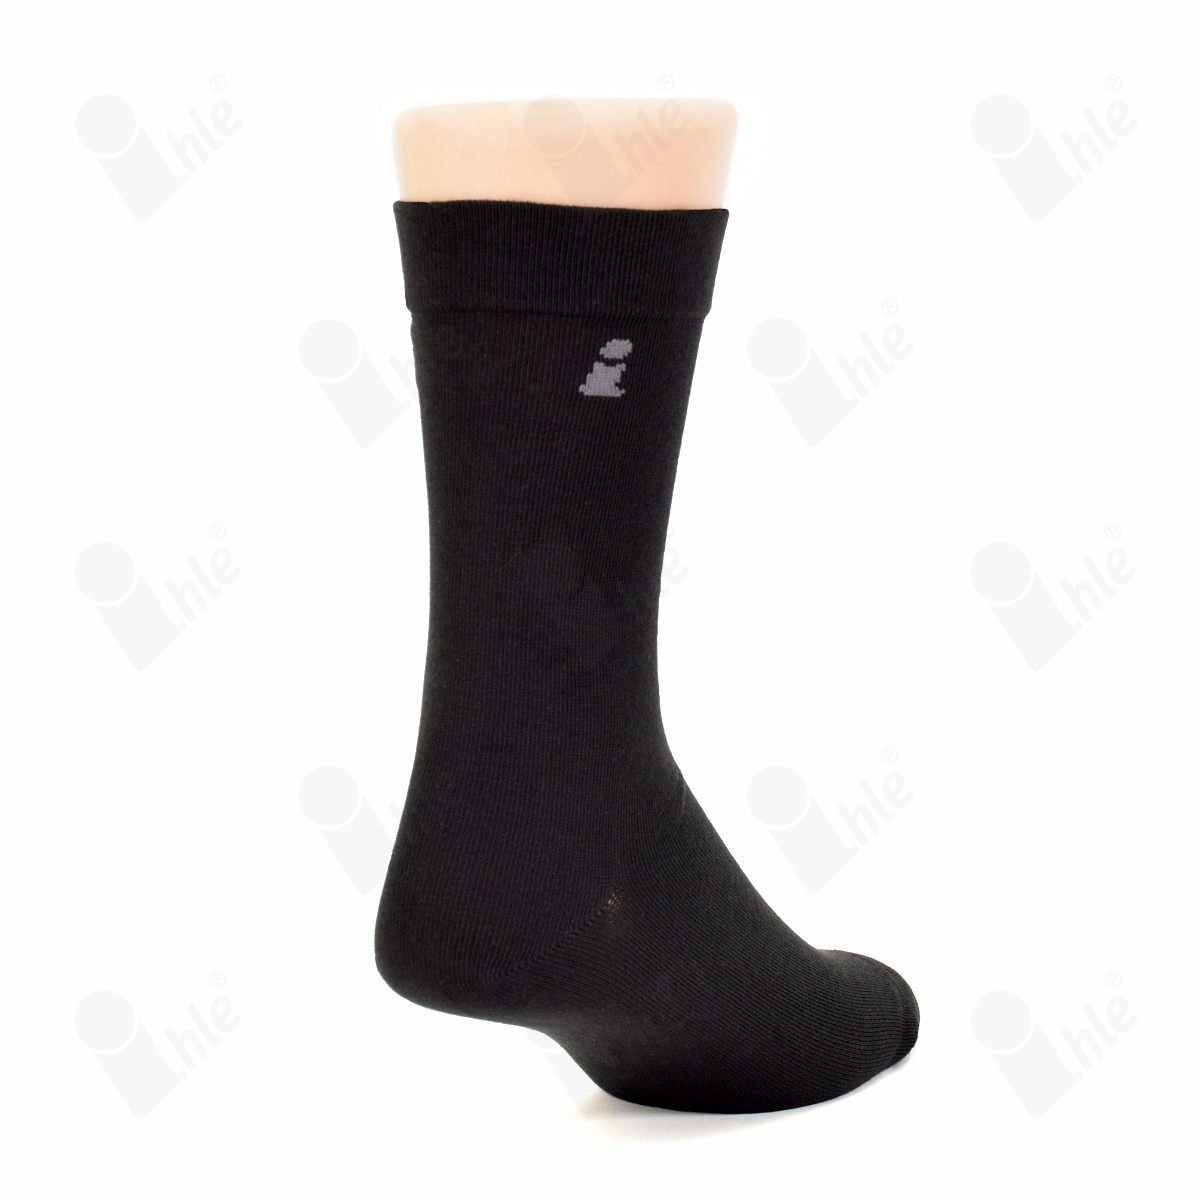 Ihle Socke klassisch schwarz Gr. 39-42